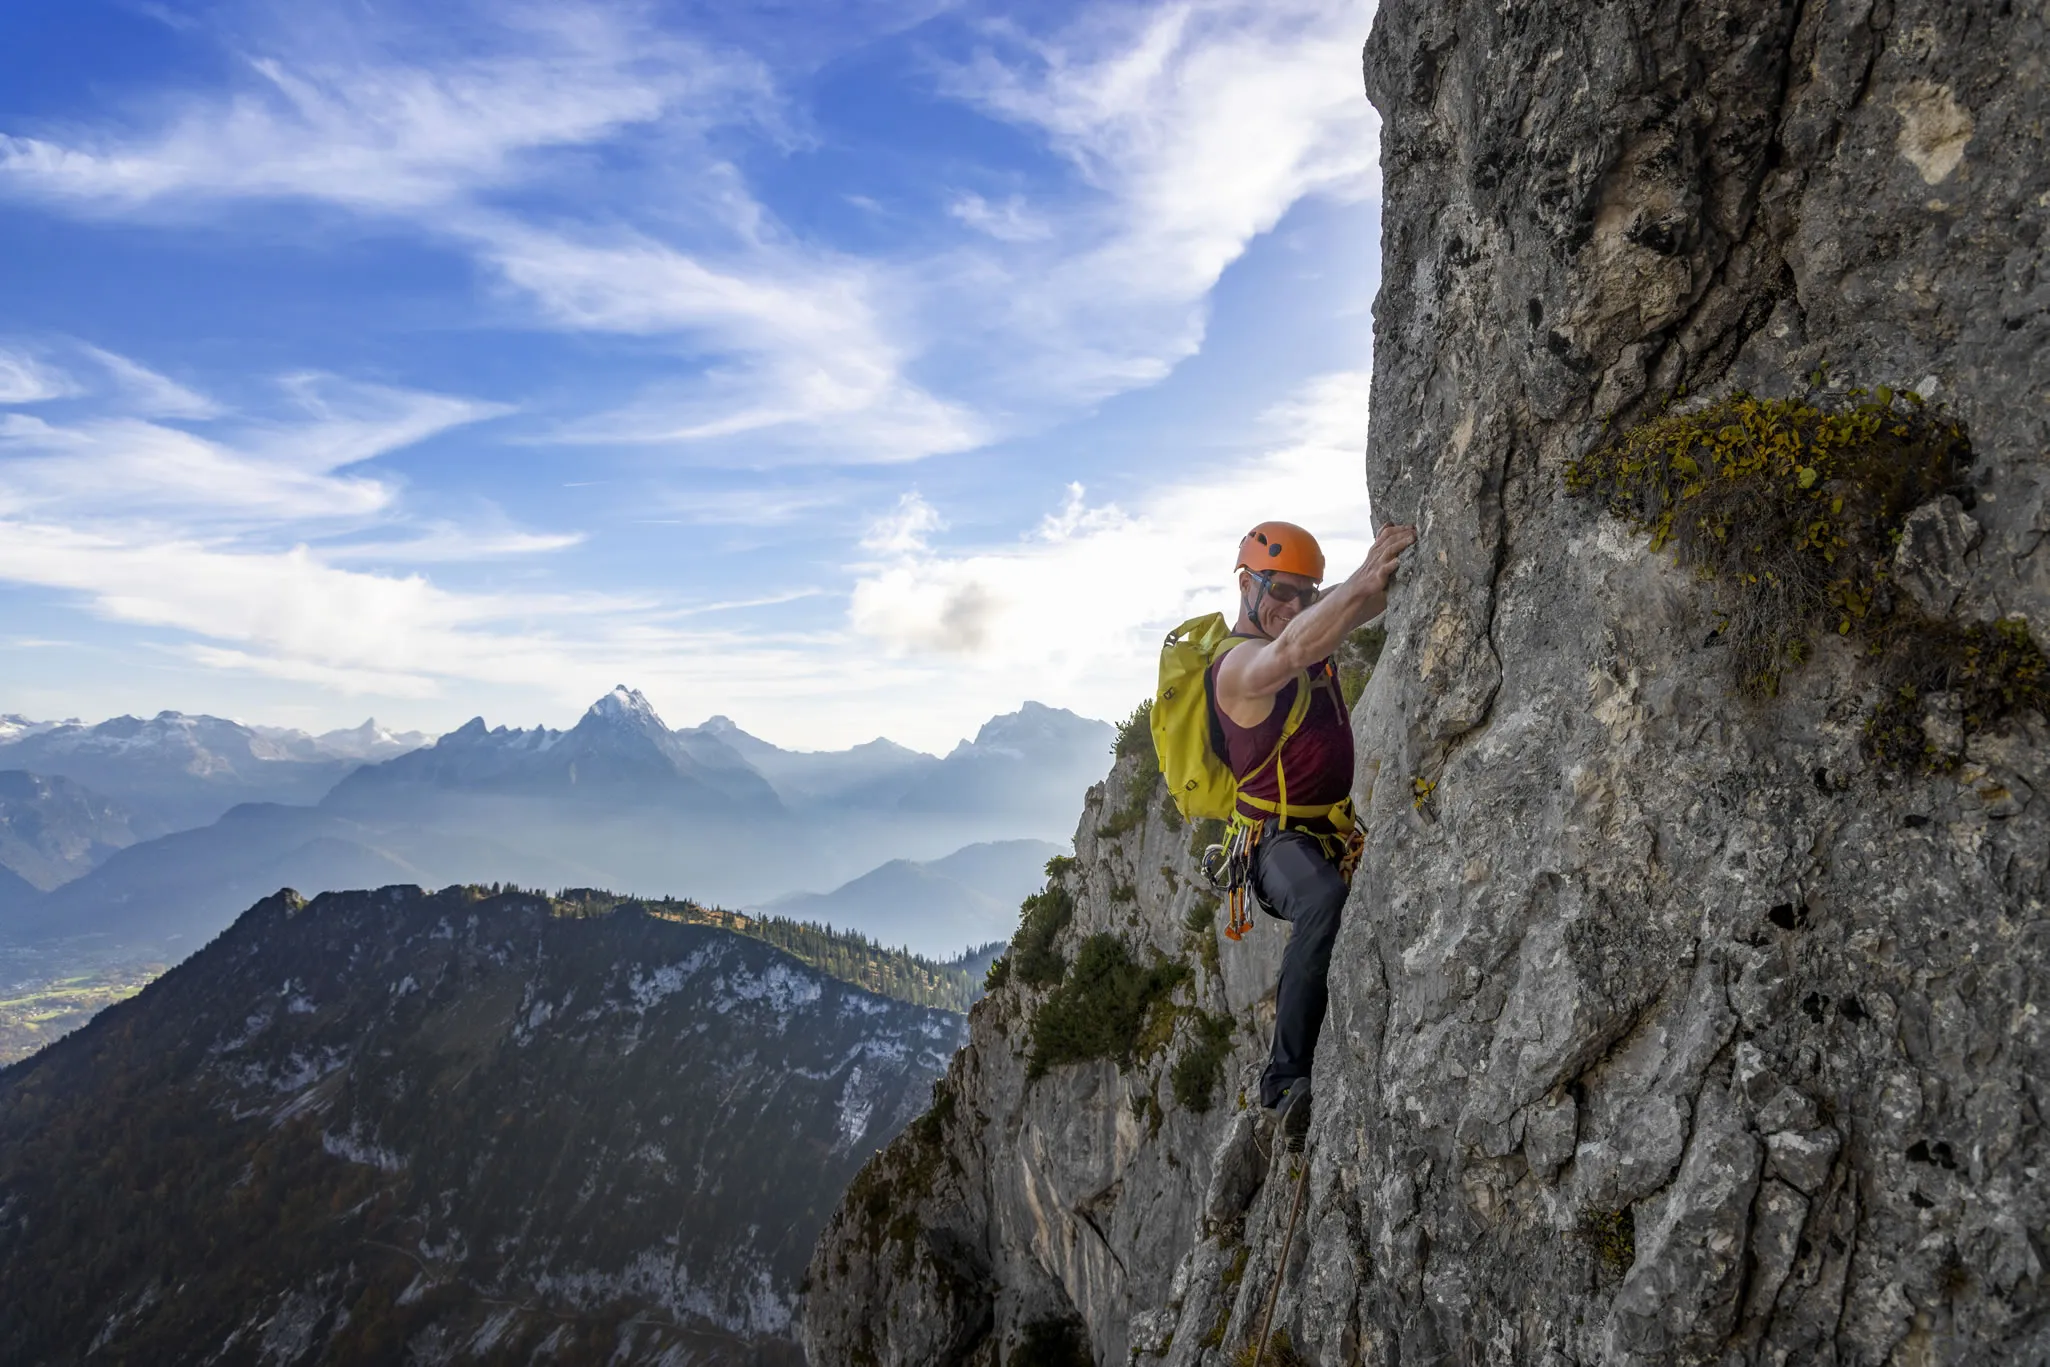 Quote Sports Insurance - Rock Climbing Injury Insurance